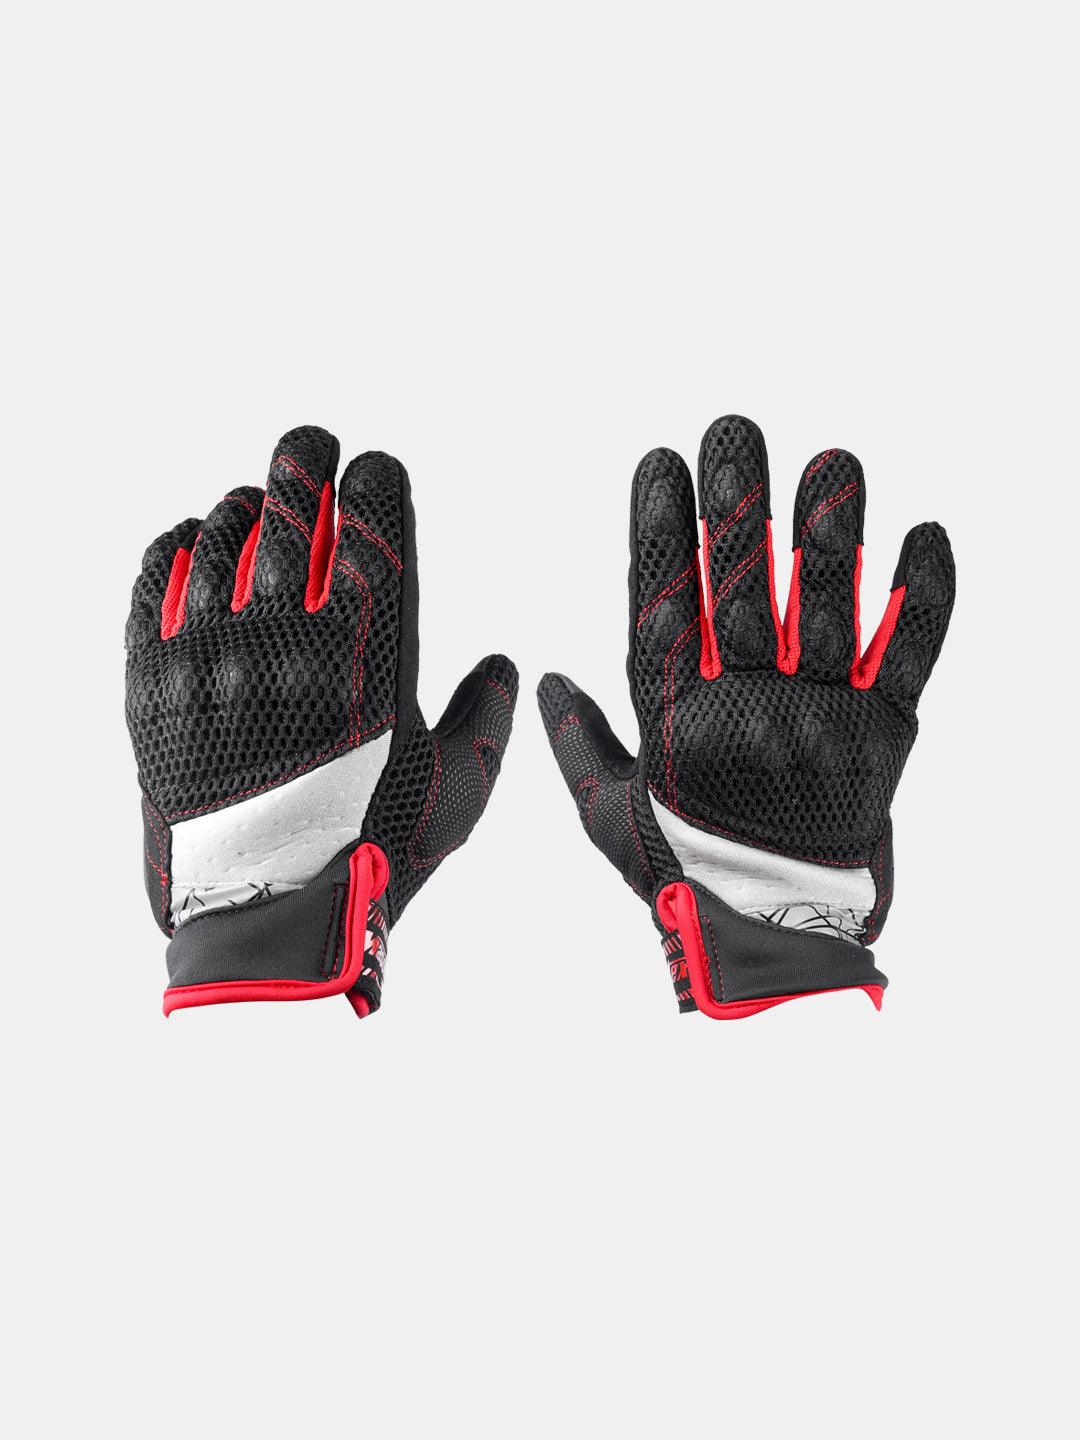 Masontex Gloves M44 Black Red - Moto Modz